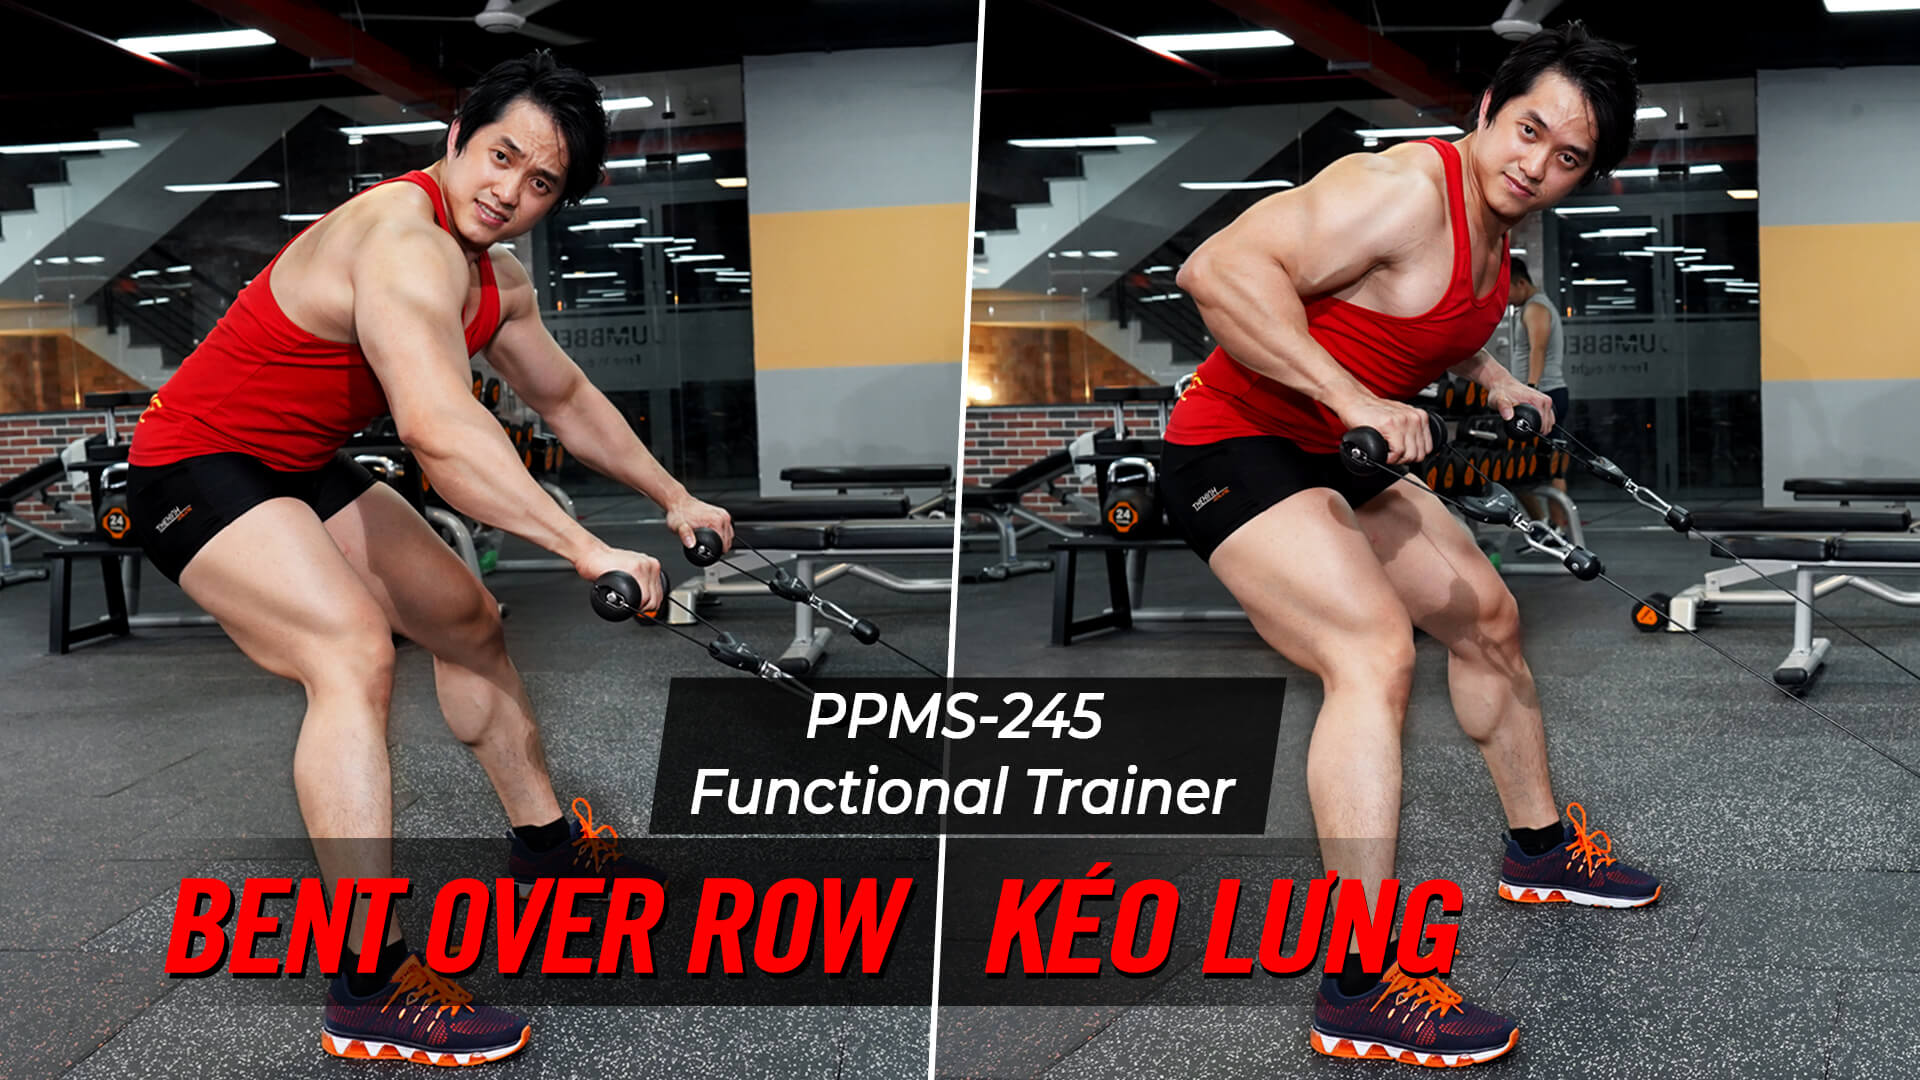 Bent Over Row - Hướng dẫn tập lưng với Functional Trainer (PPMS-245)